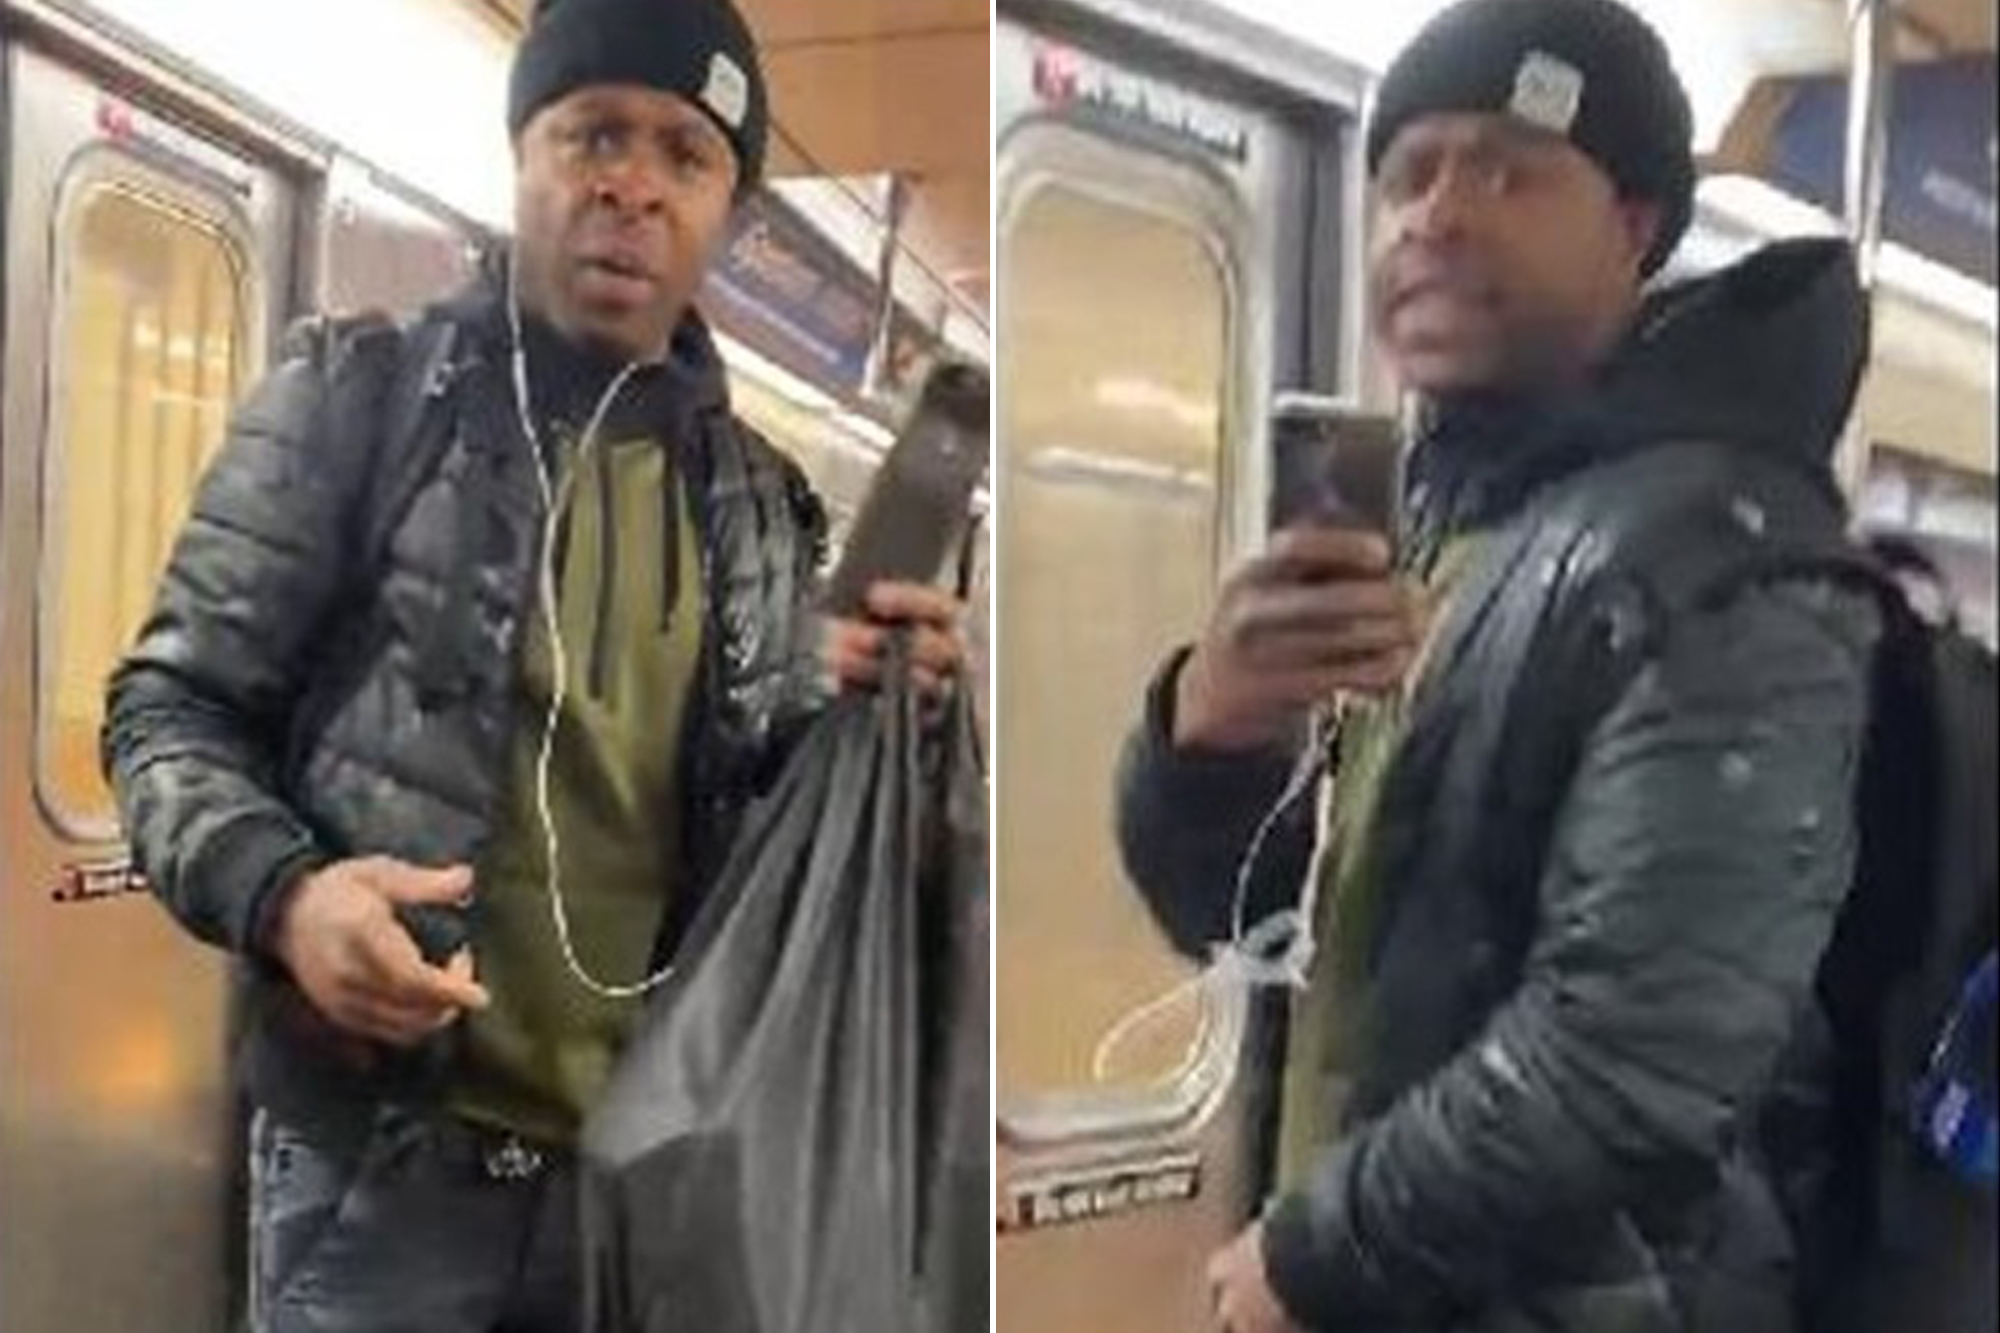 dimitri bianco add man eating woman on subway photo